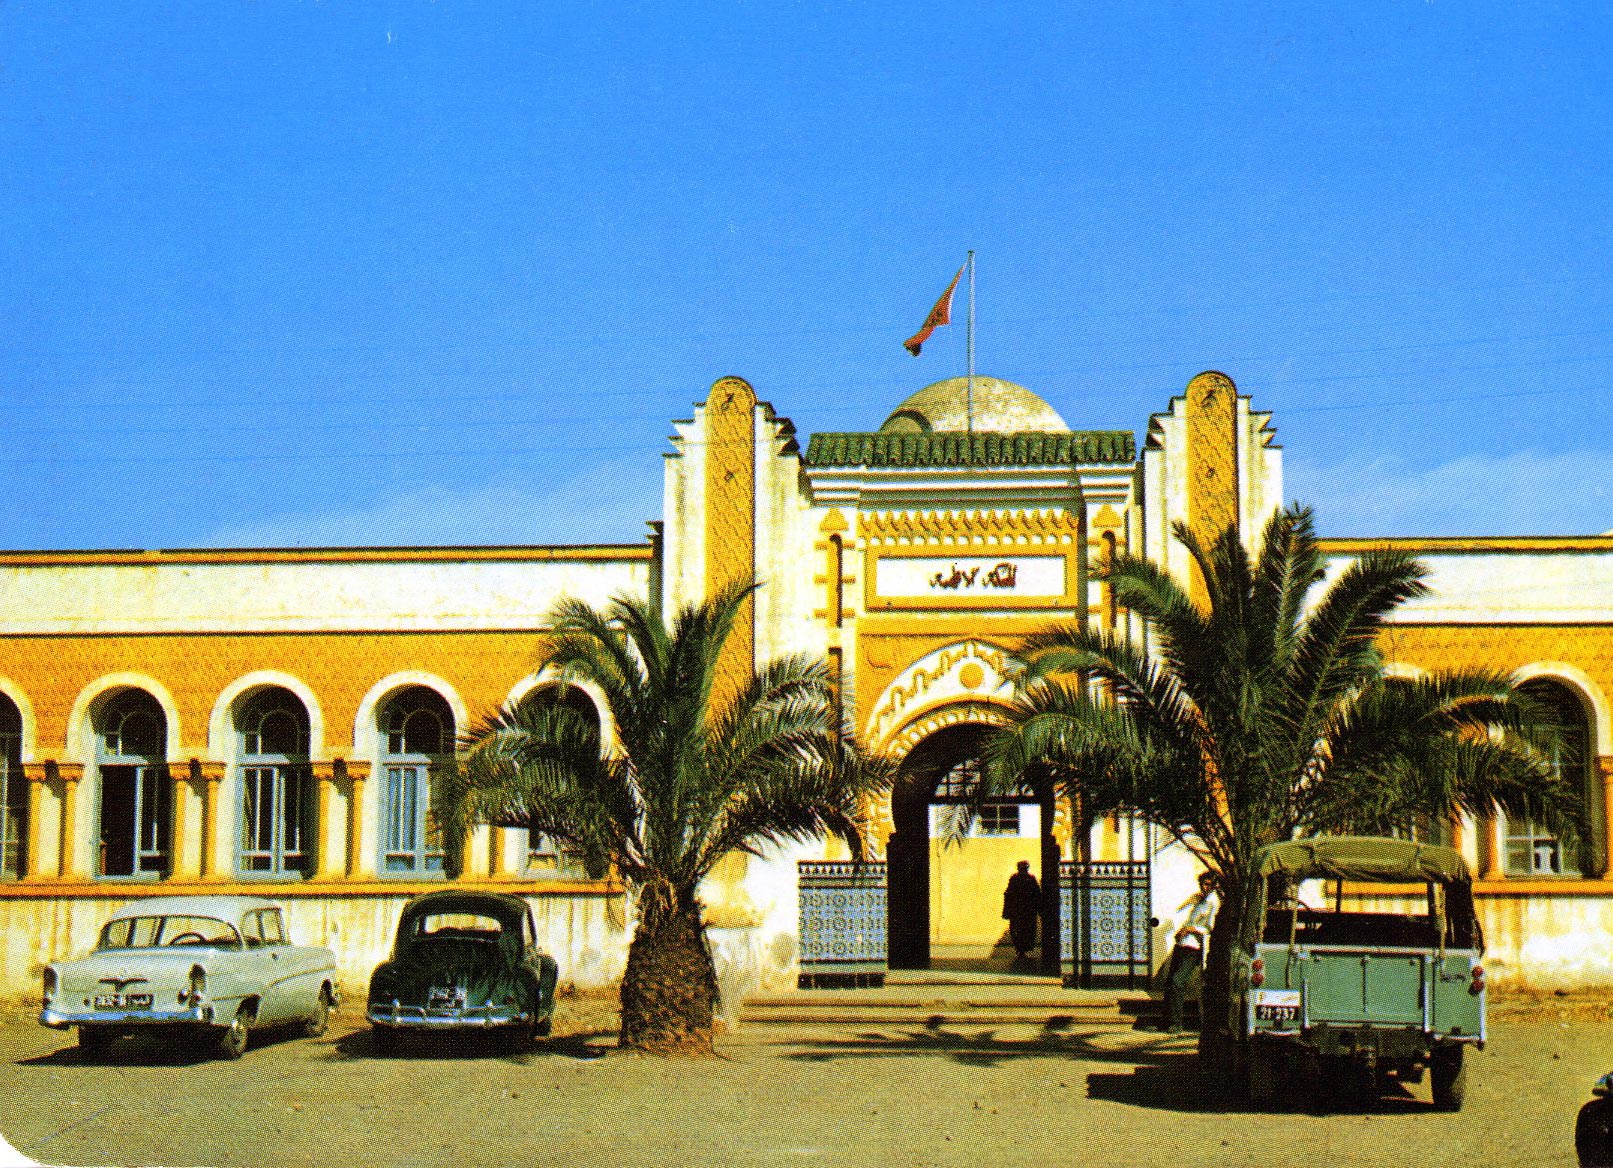 Administrative buildings in Nador